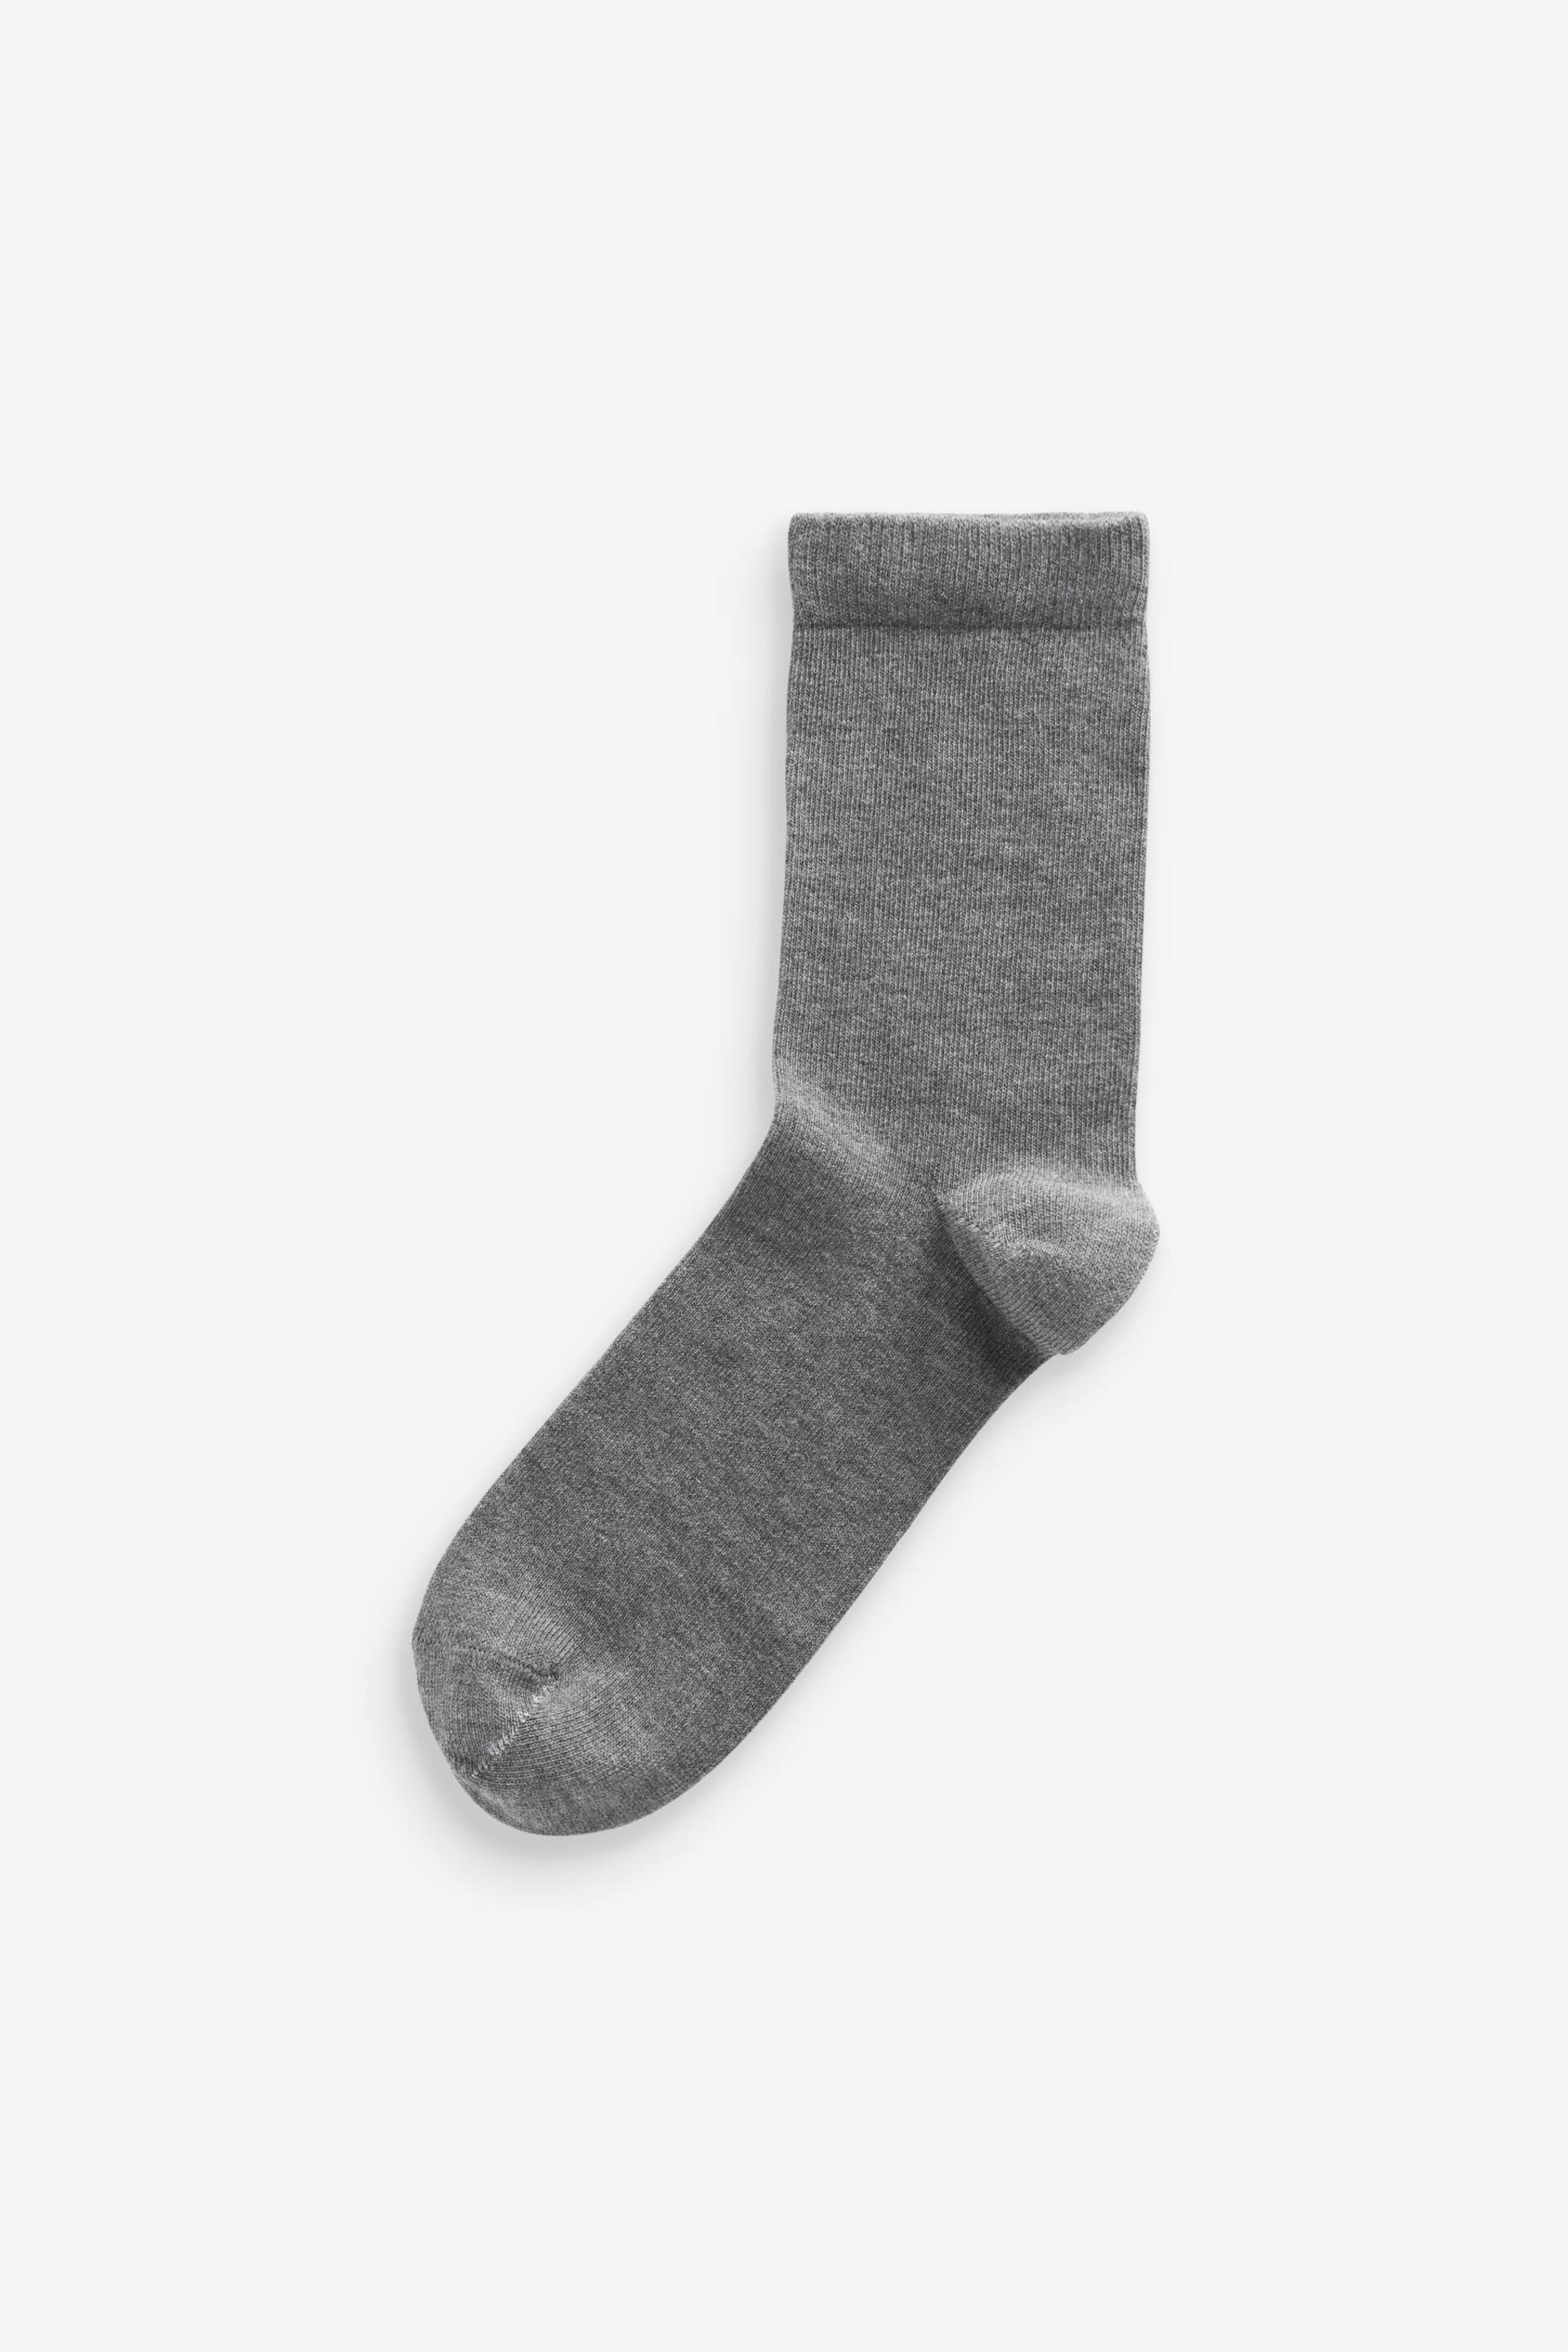 Dark Grey Modal Ankle Socks 4 Pack - Image 2 of 2